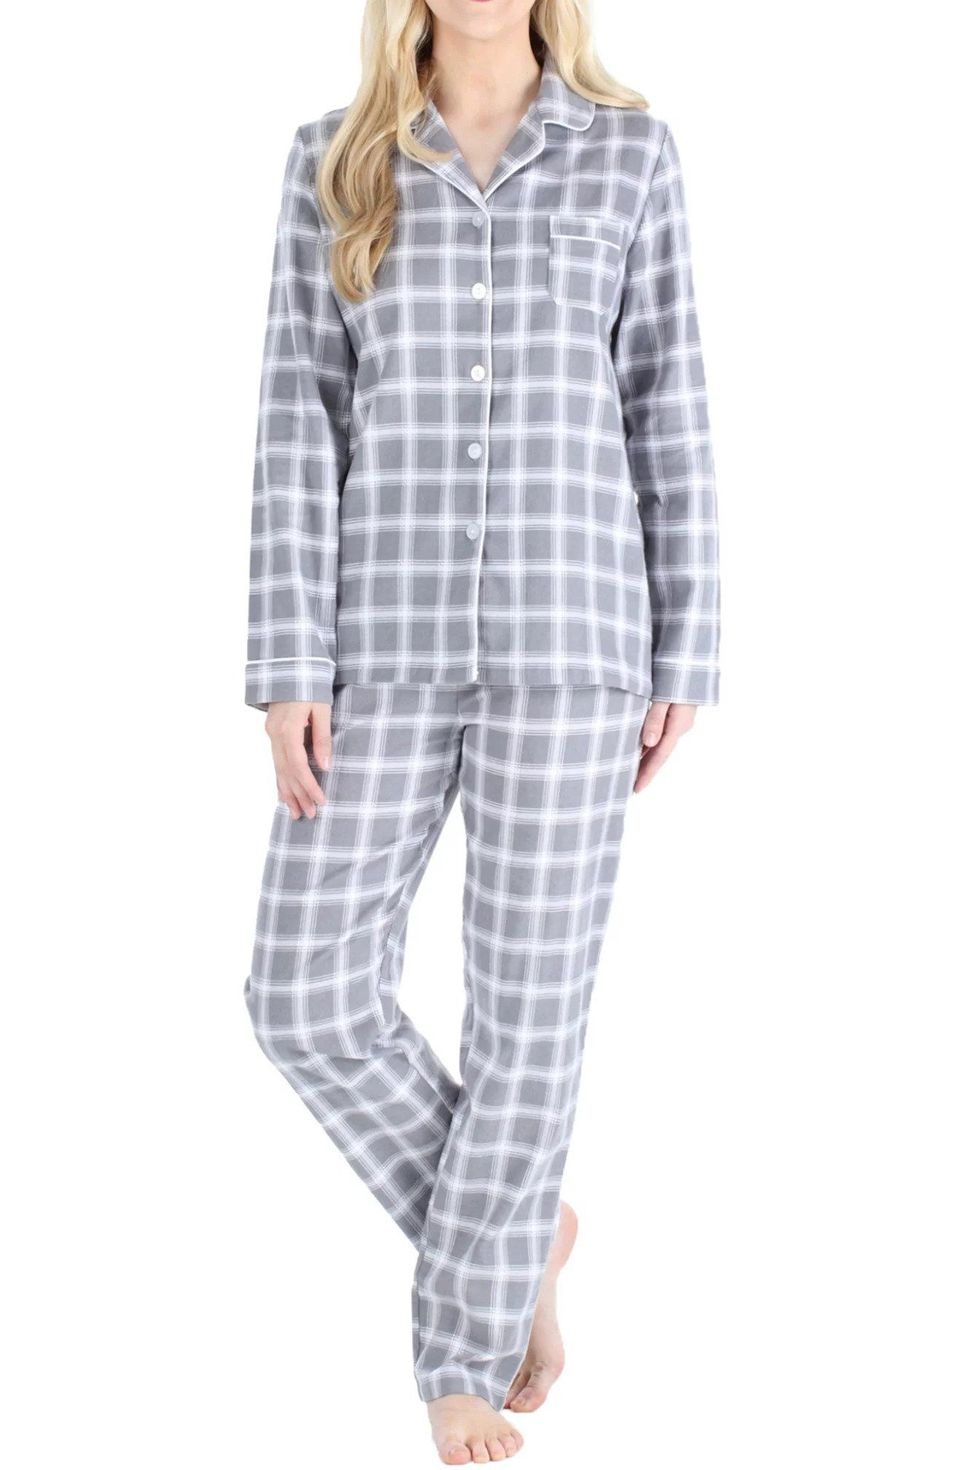 Joyspun Women's Long Sleeve Tee and Joggers Sleep Set with Headband,  3-Piece Pajama Set, Sizes S-3X